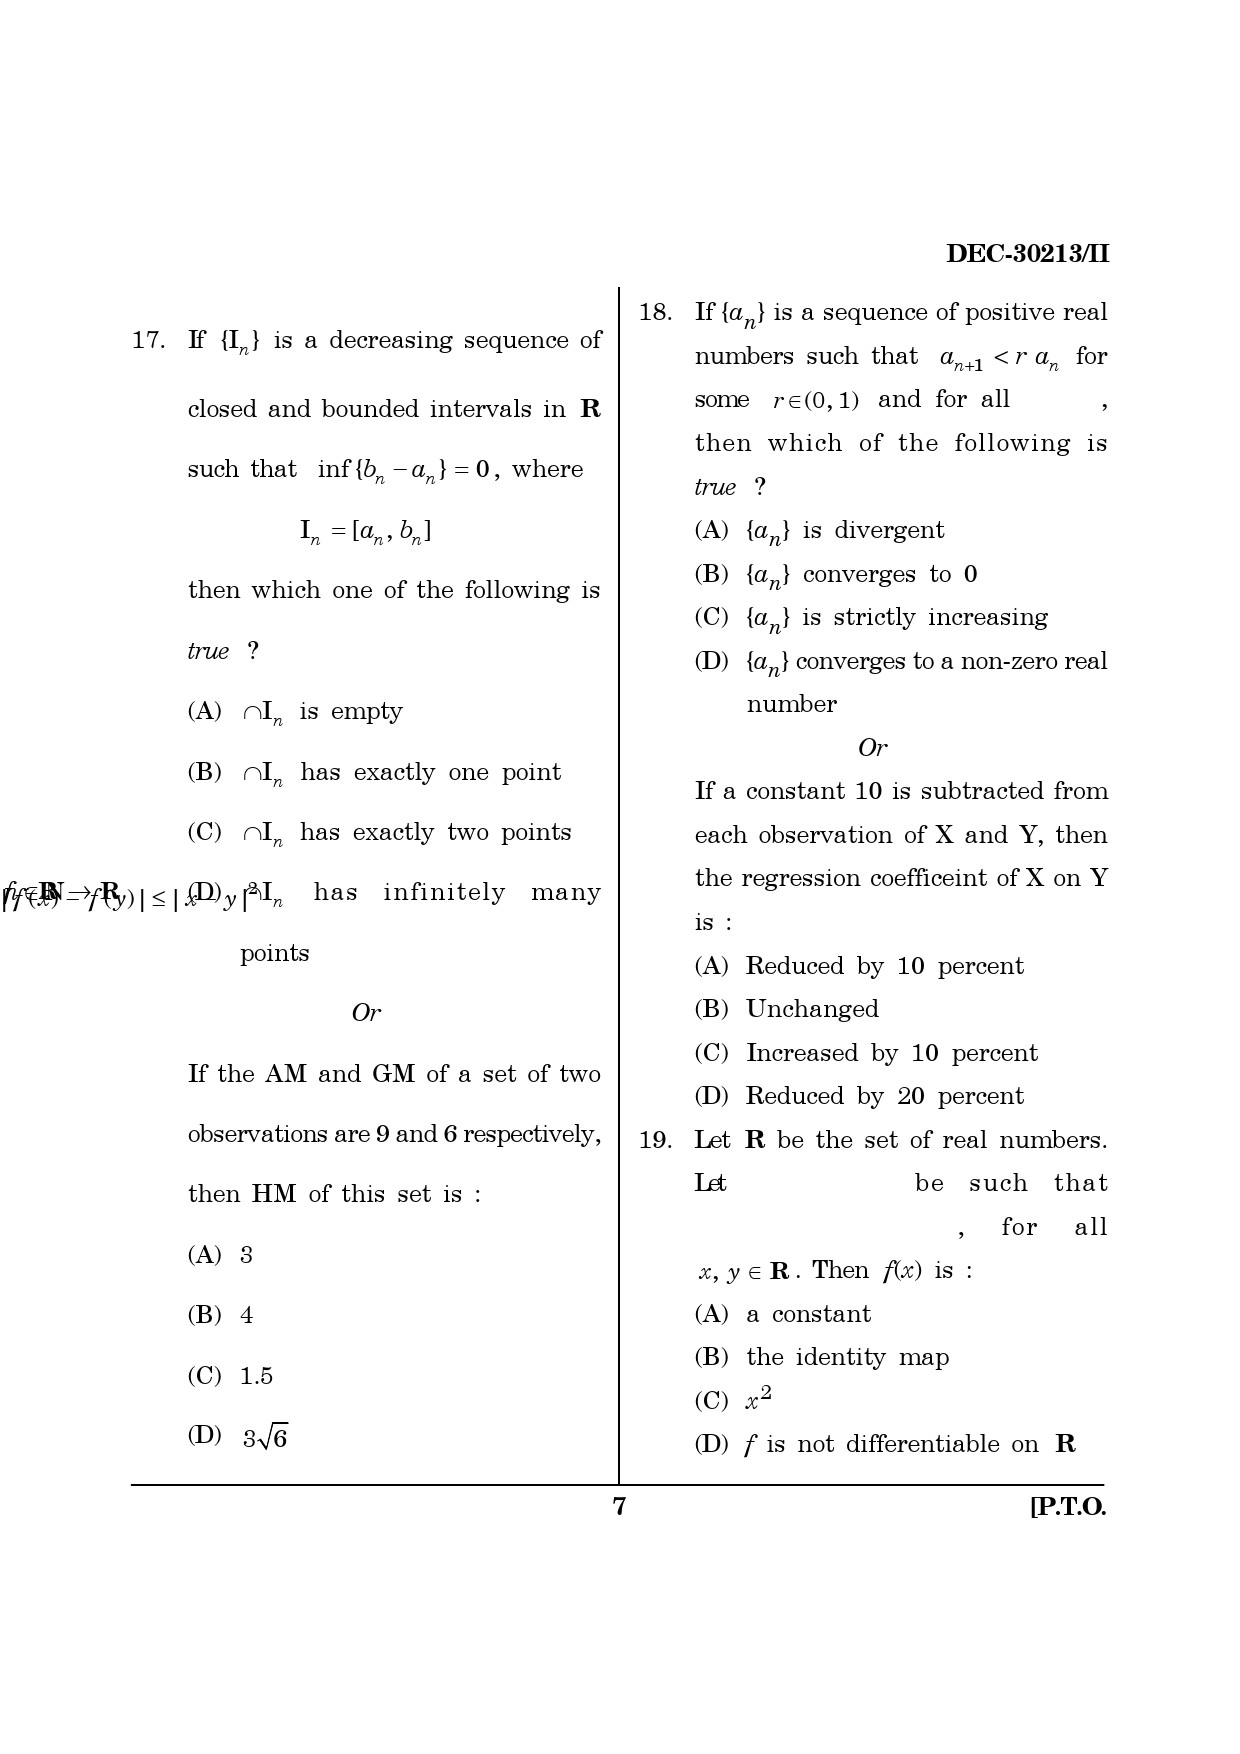 Maharashtra SET Mathematical Sciences Question Paper II December 2013 6